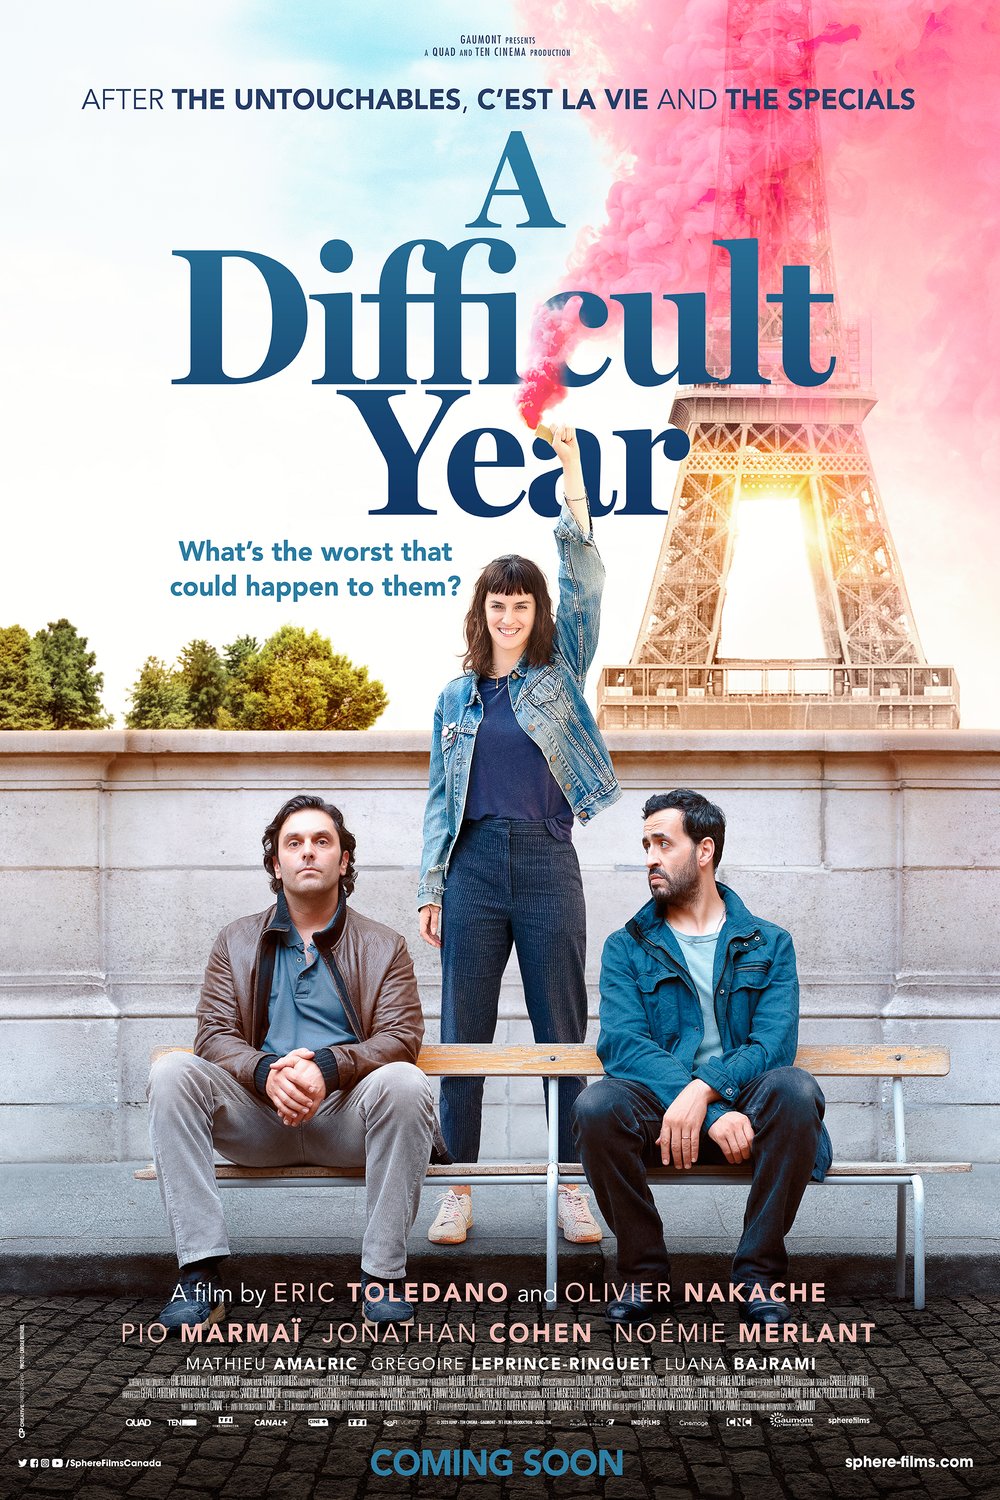 L'affiche du film A Difficult Year